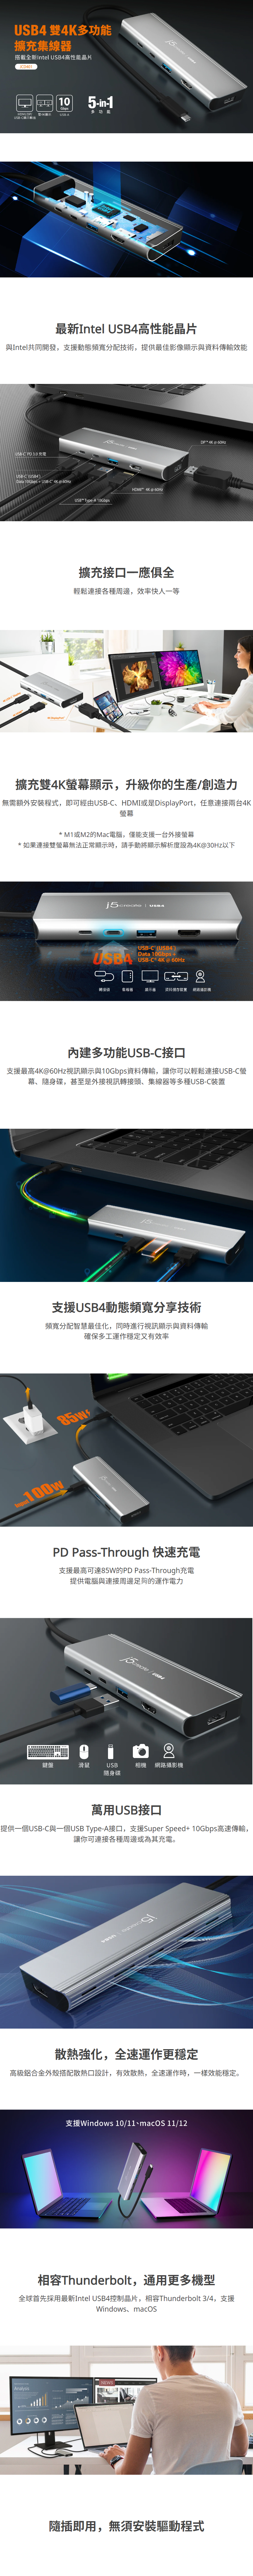 最新Intel USB4高性能晶片  與Intel共同開發，支援動態頻寬分配技術，提供最佳影像顯示與資料傳輸效能    擴充接口一應俱全  輕鬆連接各種周邊，效率快人一等    擴充雙4K螢幕顯示，升級你的生產/創造力  無需額外安裝程式，即可經由USB-C、HDMI或是DisplayPort，任意連接兩台4K螢幕  * M1或M2的Mac電腦，僅能支援一台外接螢幕 * 如果連接雙螢幕無法正常顯示時，請手動將顯示解析度設為4K@30Hz以下    內建多功能USB-C接口  支援最高4K@60Hz視訊顯示與10Gbps資料傳輸，讓你可以輕鬆連接USB-C螢幕、隨身碟，甚至是外接視訊轉接頭、集線器等多種USB-C裝置      支援USB4動態頻寬分享技術  頻寬分配智慧最佳化，同時進行視訊顯示與資料傳輸 確保多工運作穩定又有效率    PD Pass-Through 快速充電  支援最高可達85W的PD Pass-Through充電 提供電腦與連接周邊足夠的運作電力    萬用USB接口  提供一個USB-C與一個USB Type-A接口，支援Super Speed+ 10Gbps高速傳輸，讓你可連接各種周邊或為其充電。    散熱強化，全速運作更穩定  高級鋁合金外殼搭配散熱口設計，有效散熱，全速運作時，一樣效能穩定。   相容Thunderbolt，通用更多機型  全球首先採用最新Intel USB4控制晶片，相容Thunderbolt 3/4，支援Windows、macOS    隨插即用，無須安裝驅動程式